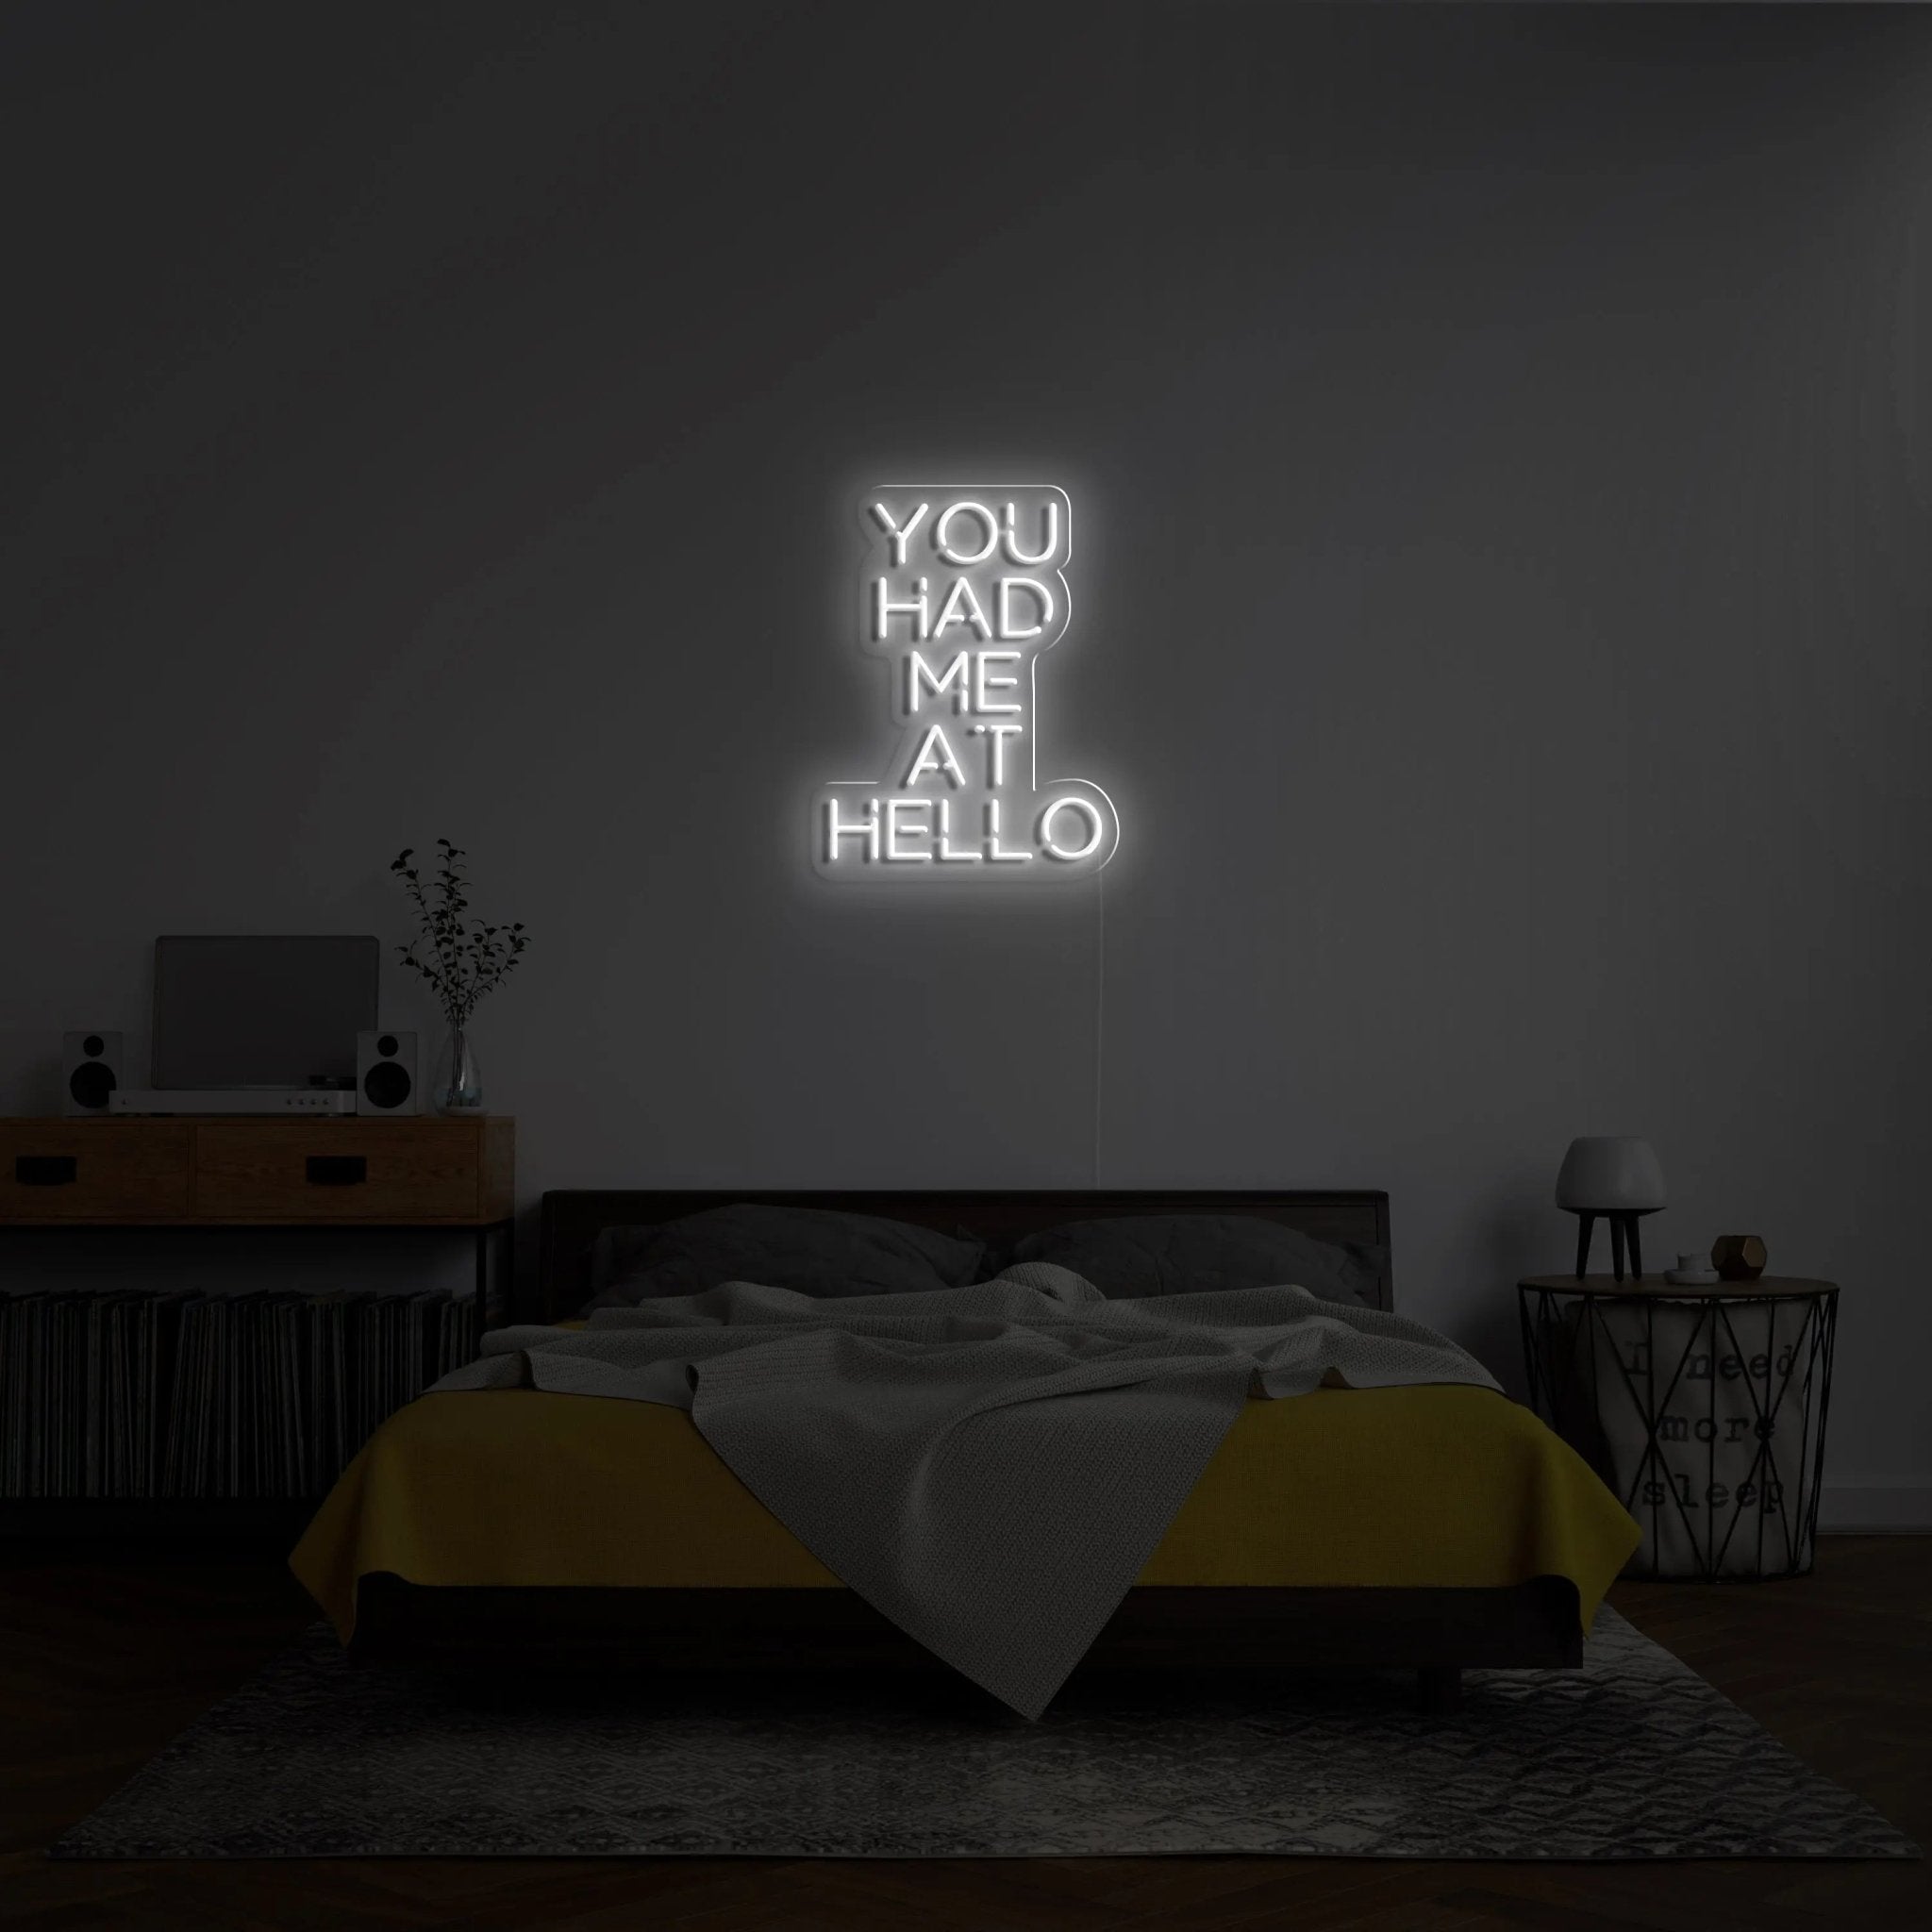 'You Had Me At Hello' Neon Sign - neonaffair